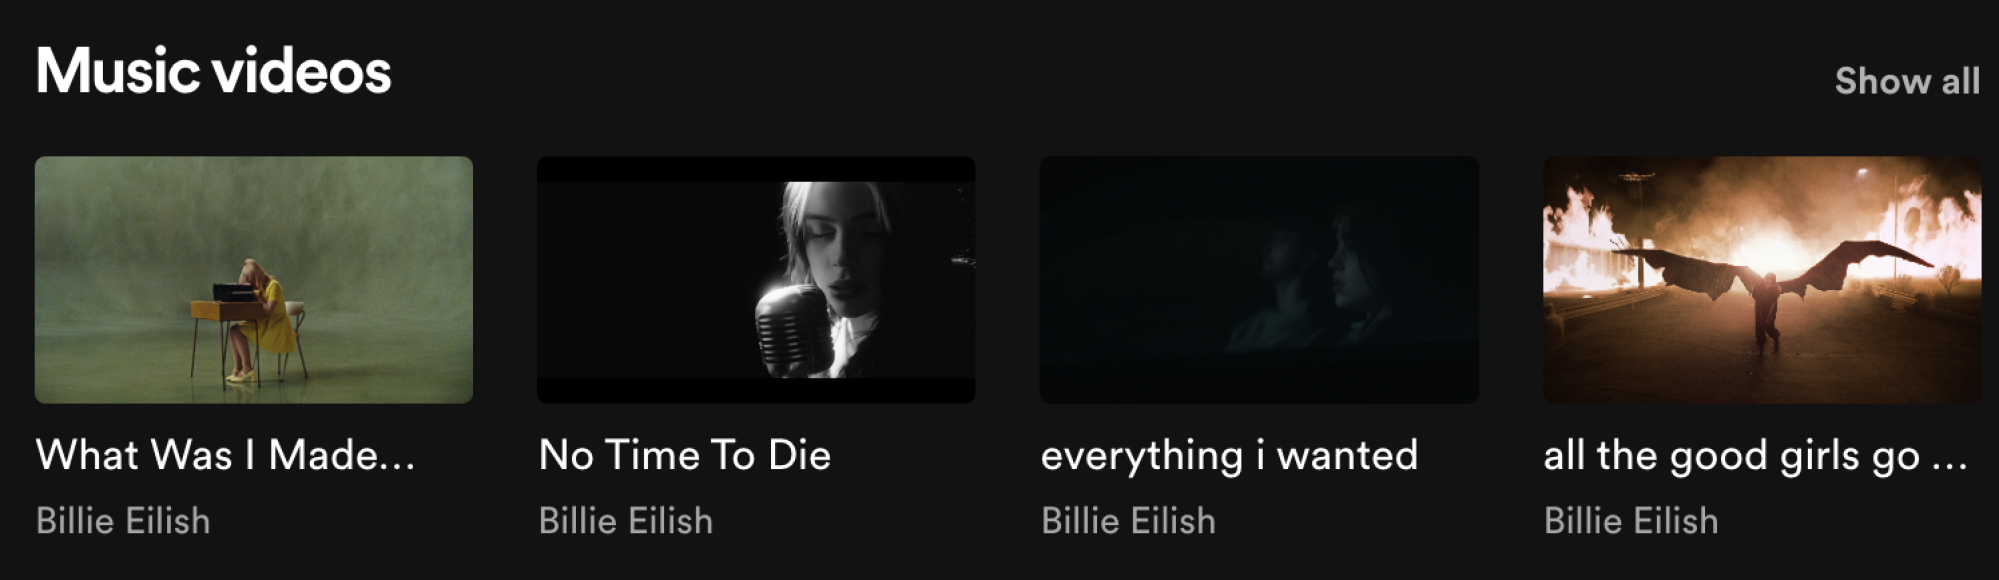 A screenshot showing Billie Eilish's music videos.